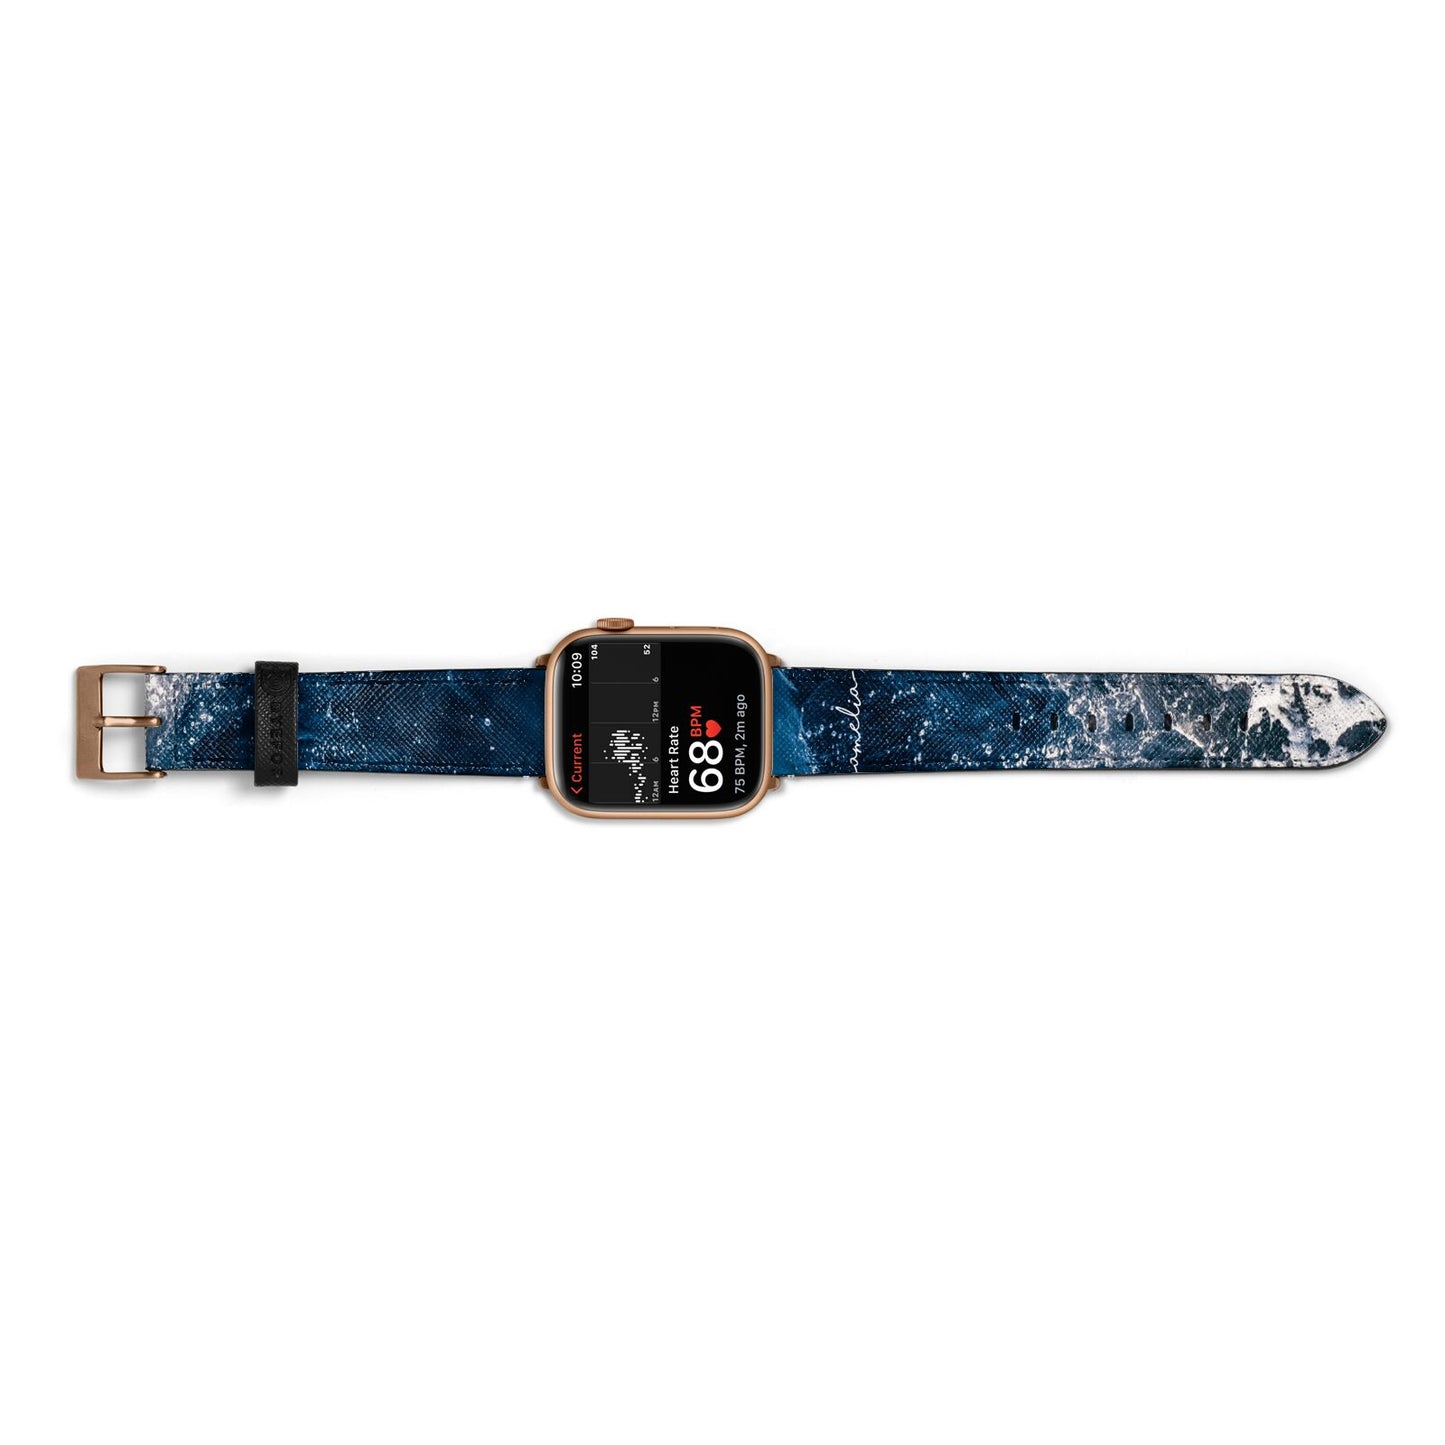 Custom Sea Apple Watch Strap Size 38mm Landscape Image Gold Hardware